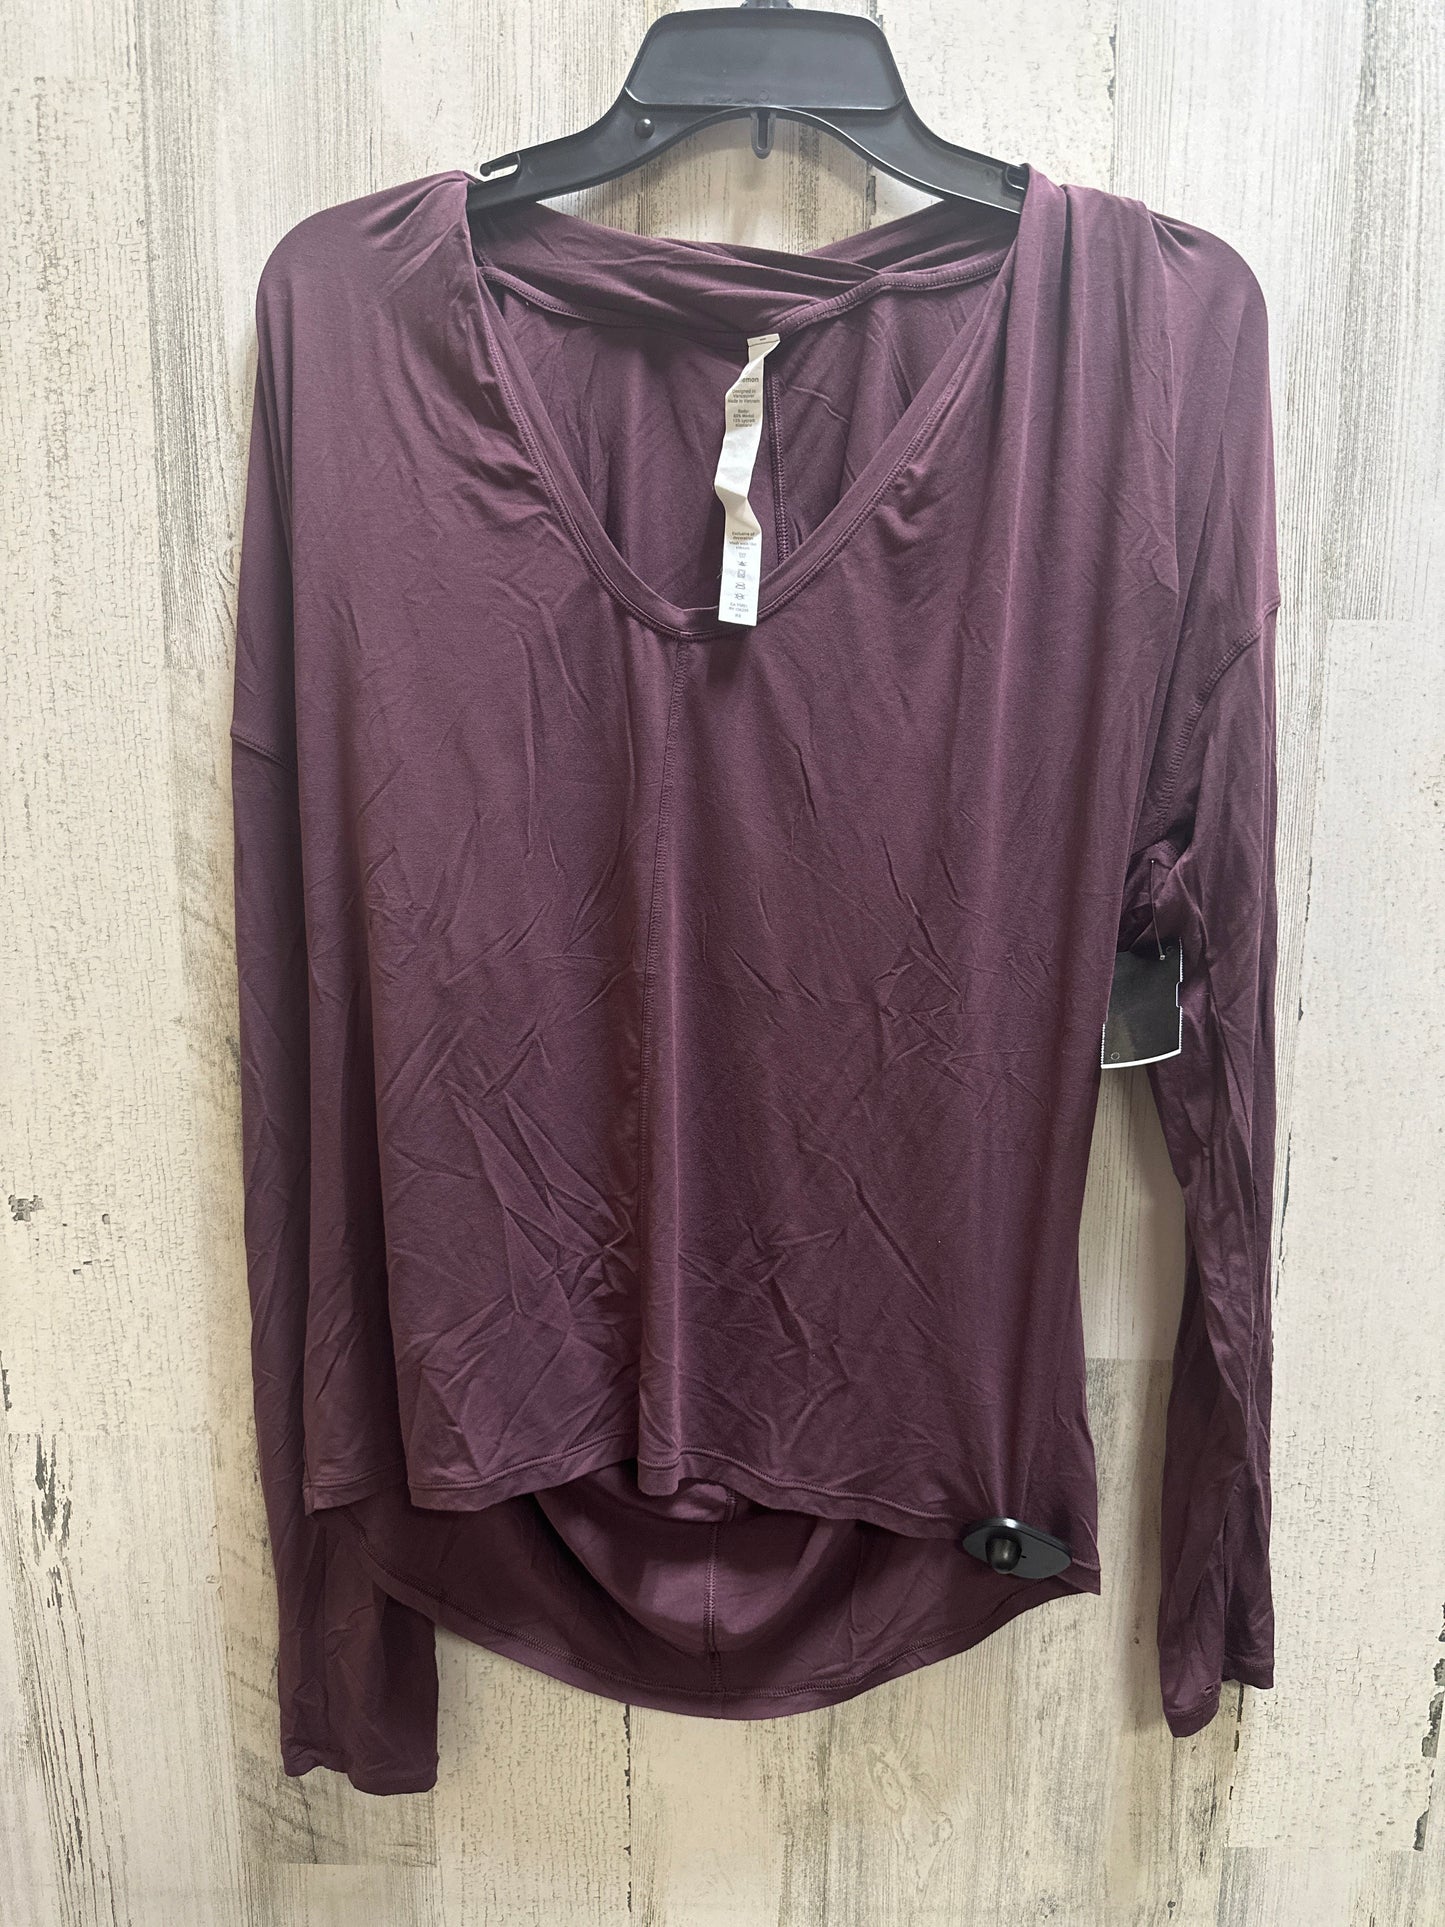 Purple Athletic Top Long Sleeve Crewneck Lululemon, Size 10